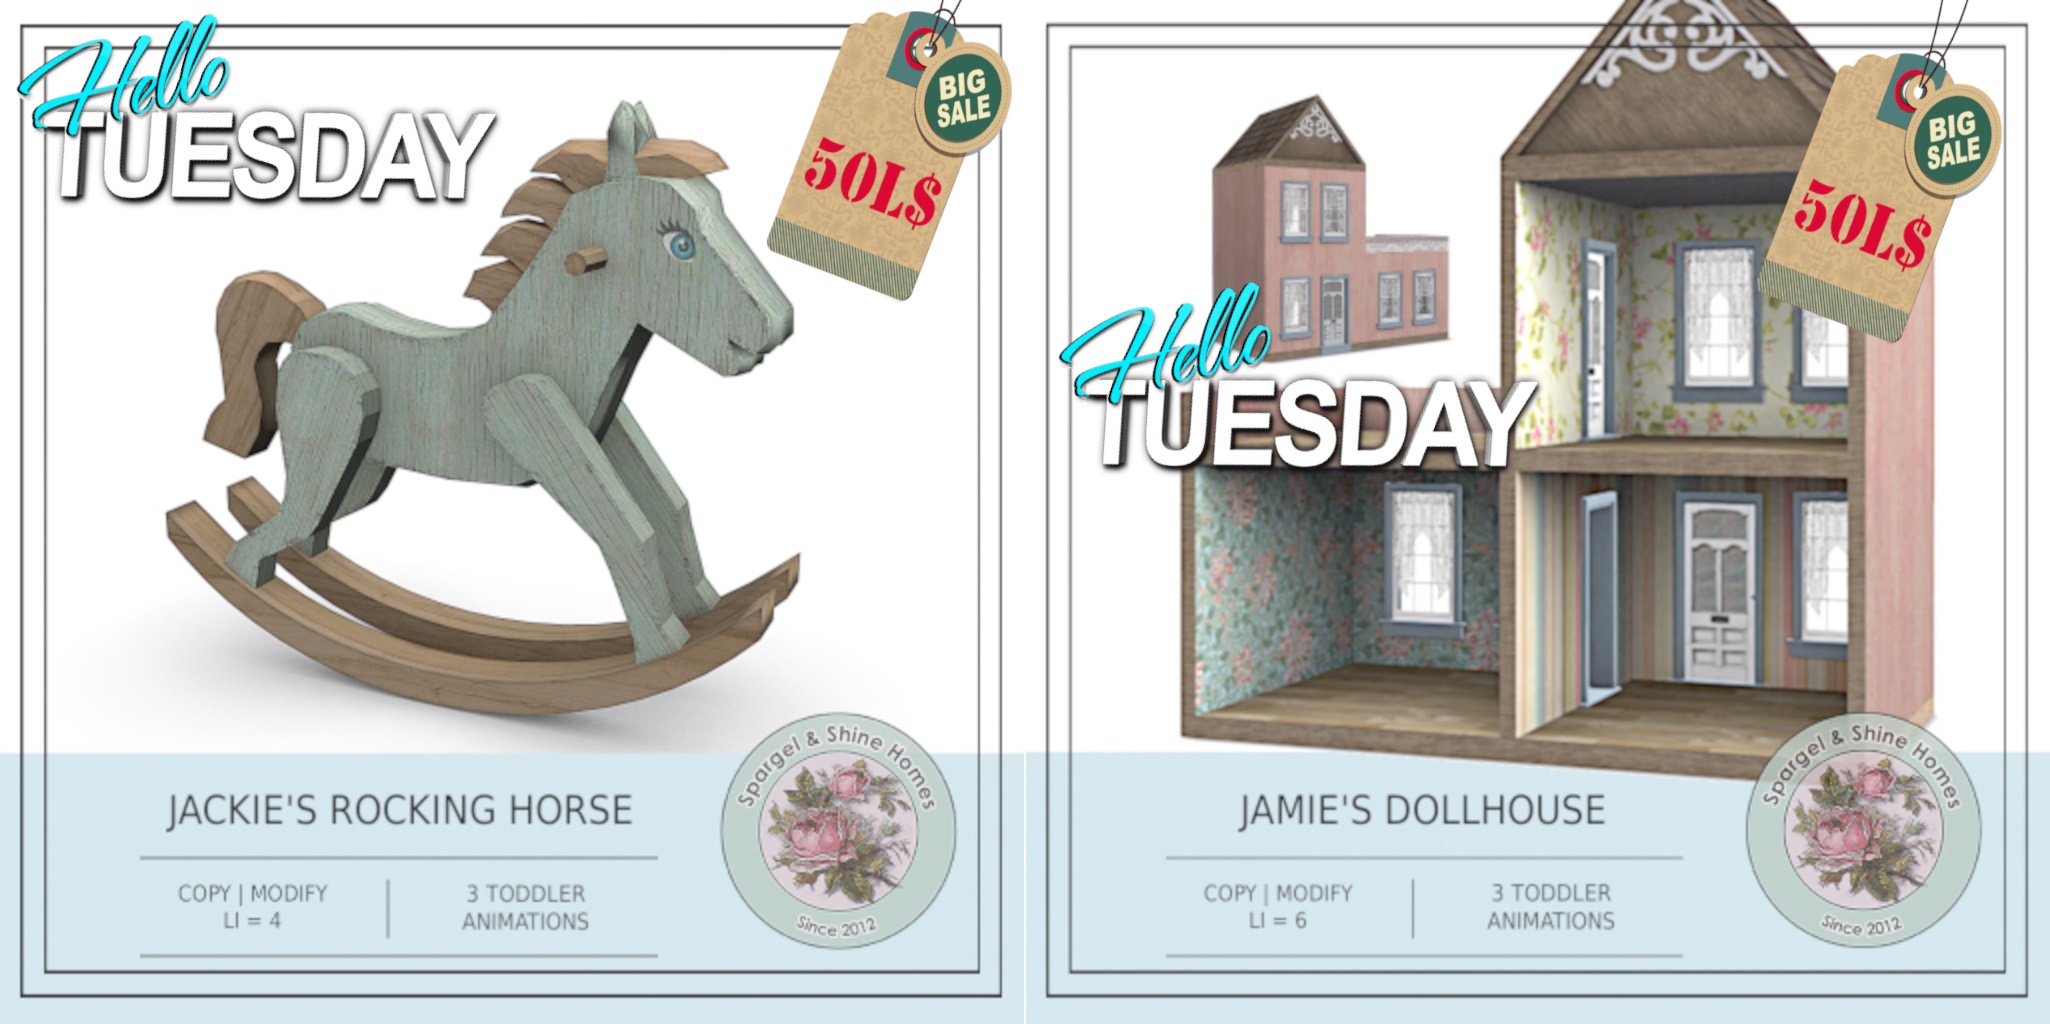 Spargel & Shine – Jackie’s Rocking Horse & Jamie’s Dollhouse